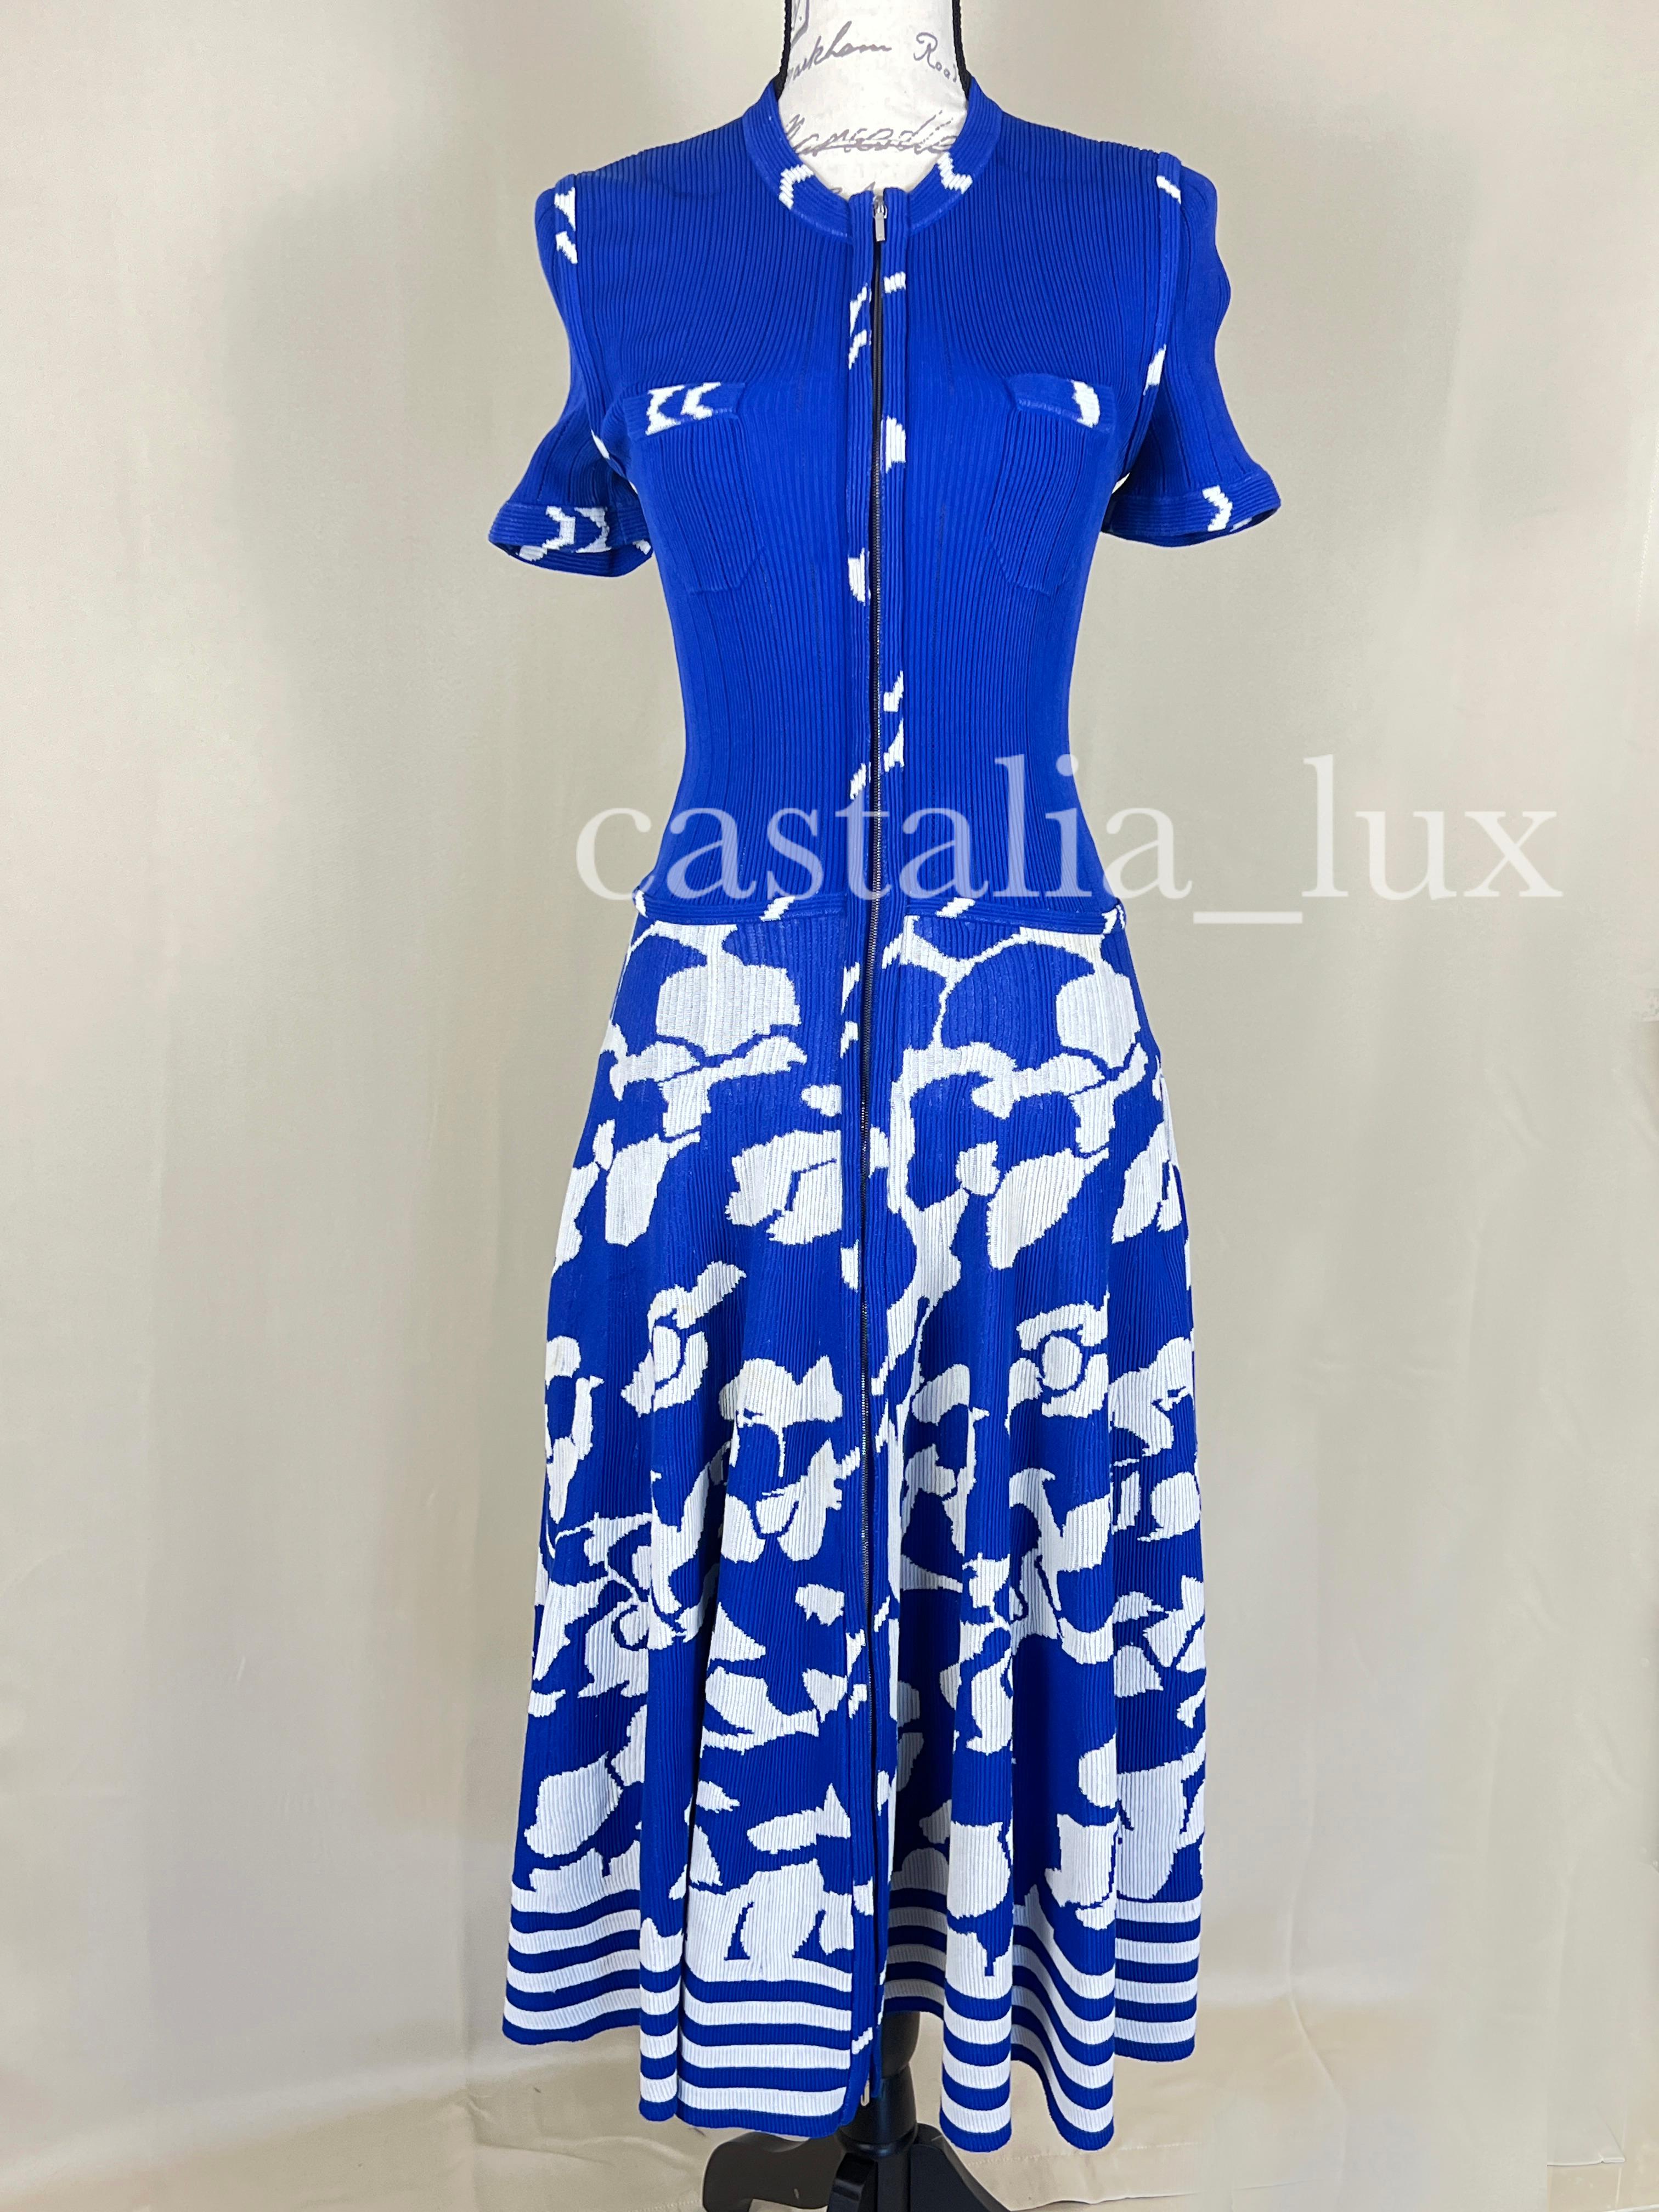 Chanel Iconic Jessica Biel Style Maxi Dress For Sale 4